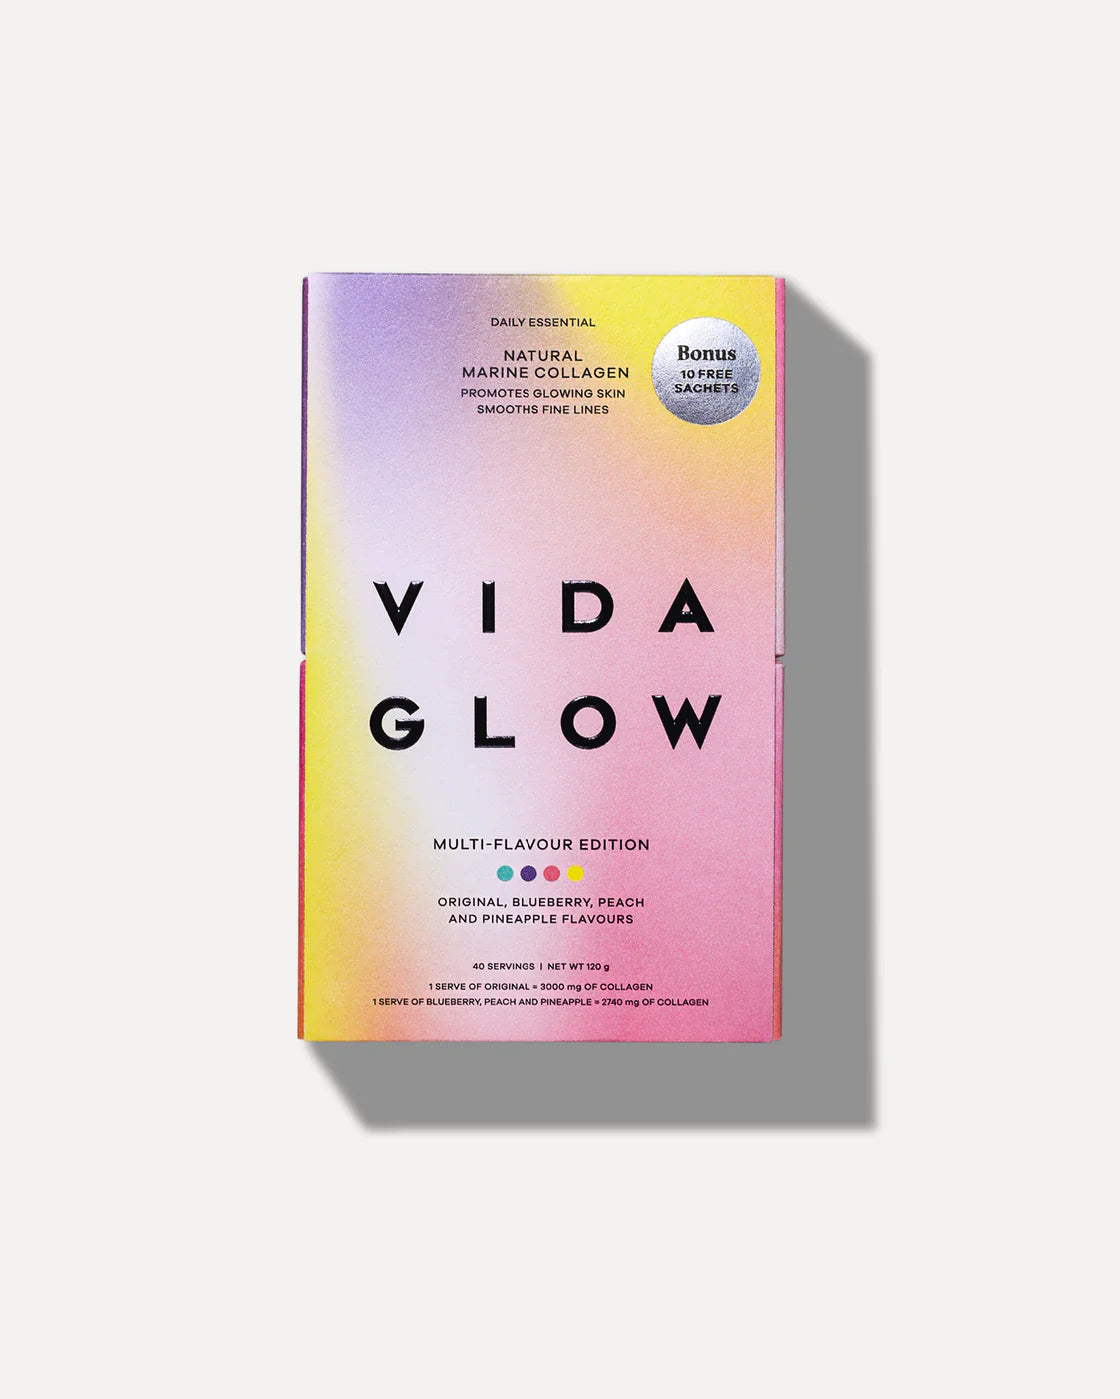 Vida Glow Multi- Flavour Edition